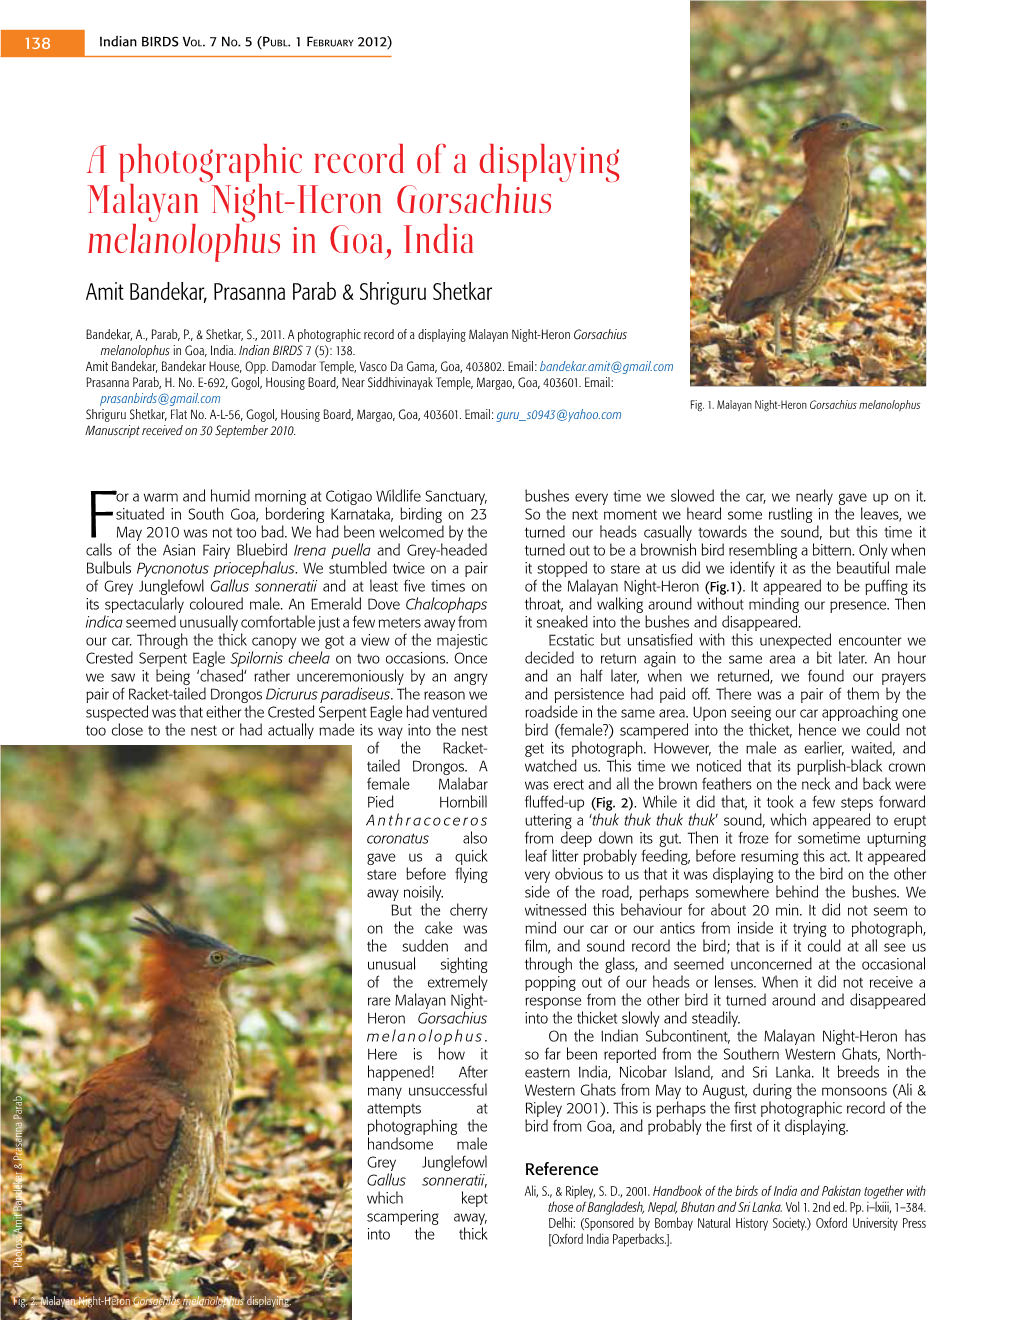 A Photographic Record of a Displaying Malayan Night-Heron Gorsachius Melanolophus in Goa, India Amit Bandekar, Prasanna Parab & Shriguru Shetkar